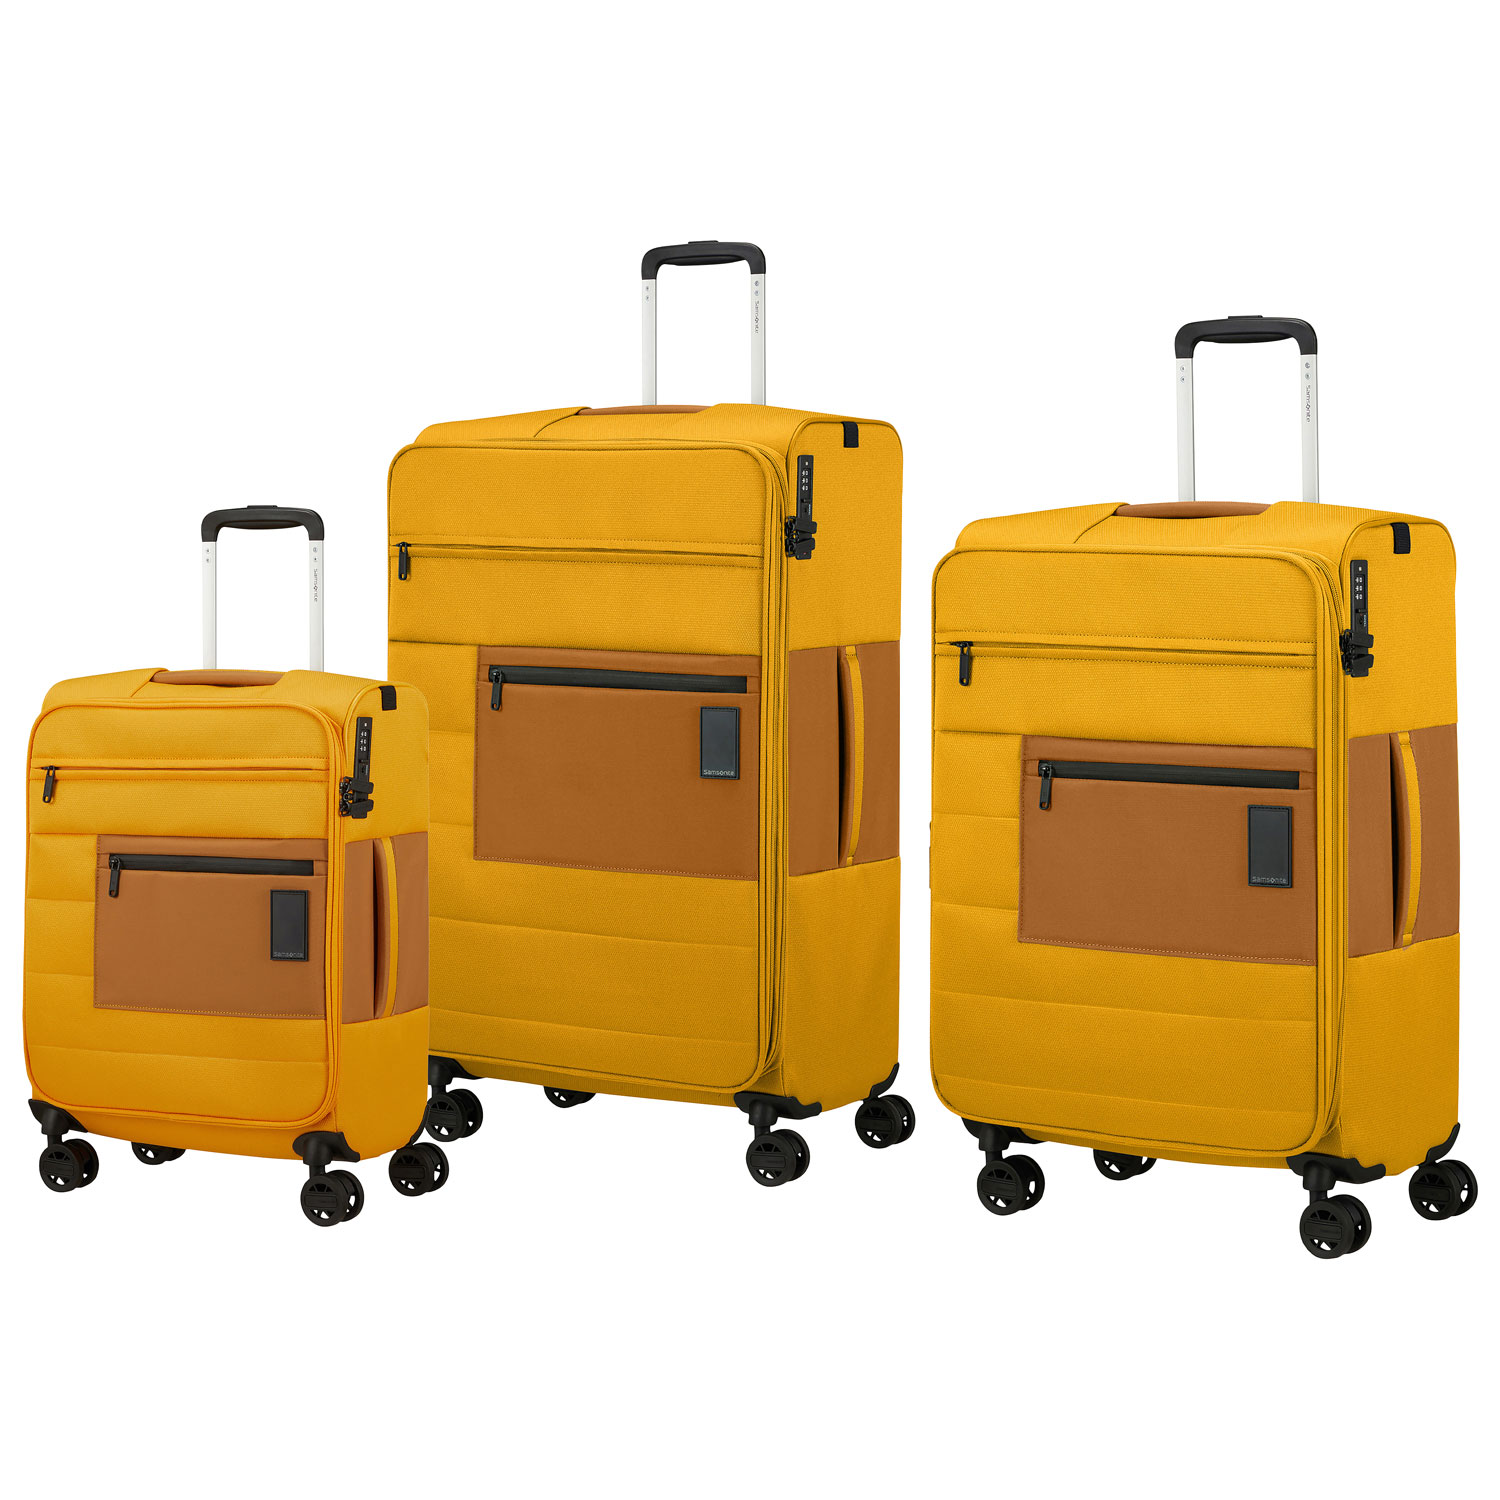 Samsonite Vaycay 3-Piece Soft Side Expandable Luggage Set - Golden Yellow